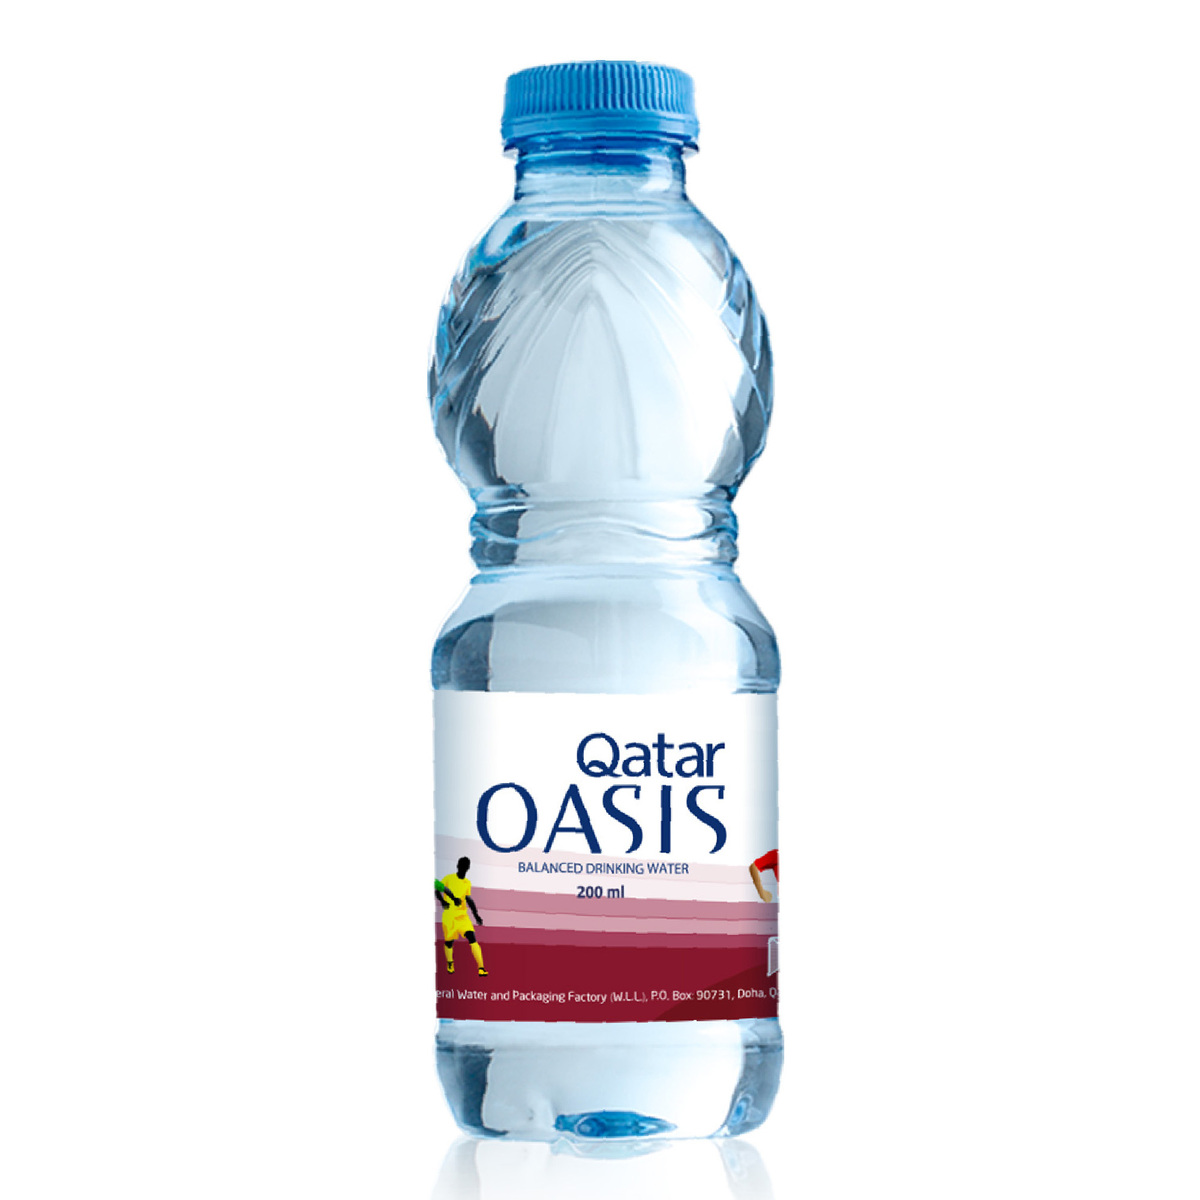 Qatar Oasis Balanced Drinking Water 24 x 200ml